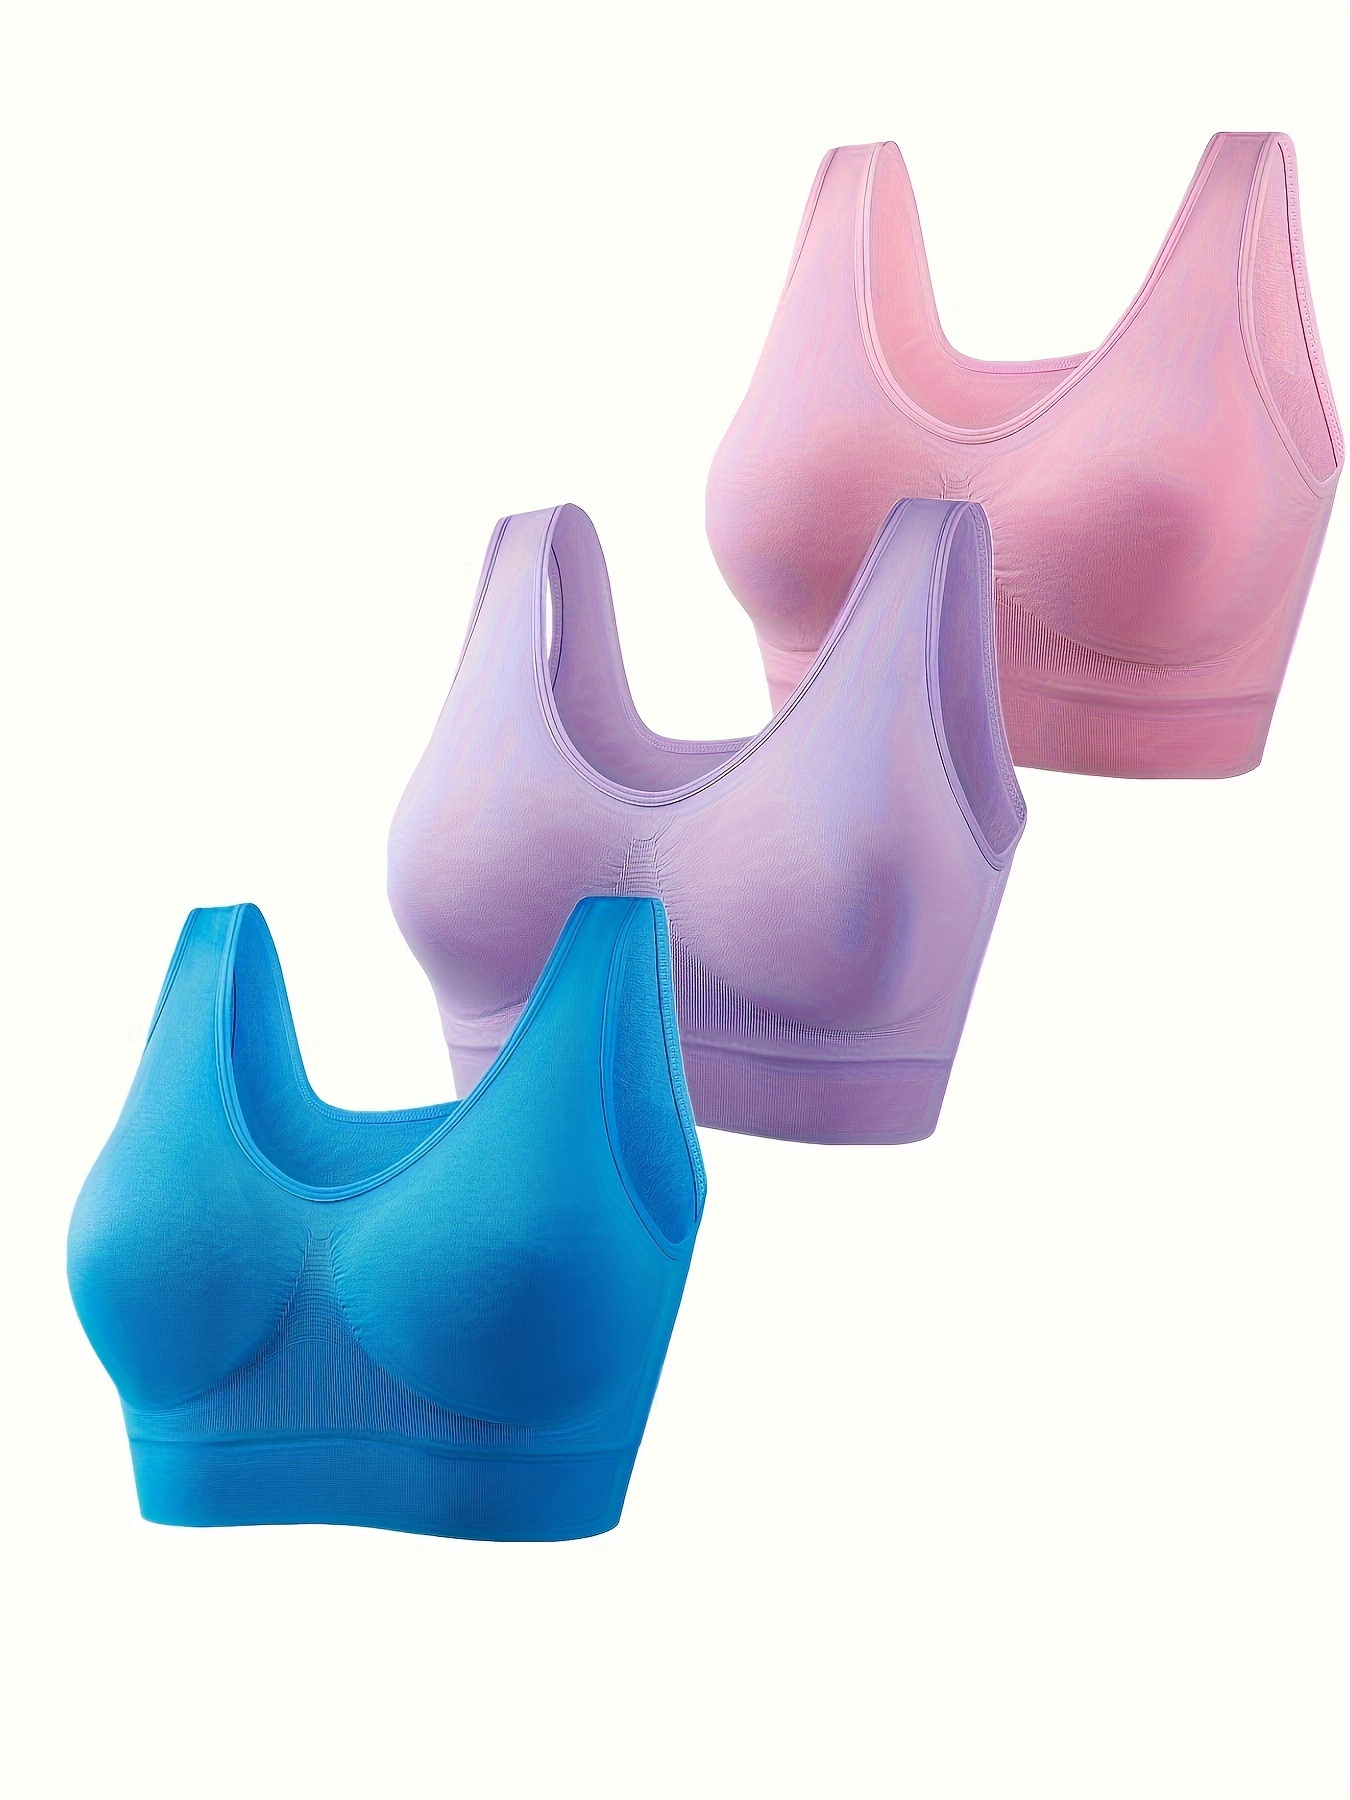 3 Pcs Triangle Cups Sports Bras, Removable Padded Push Up Wireless Bra,  Women's Lingerie & Underwear